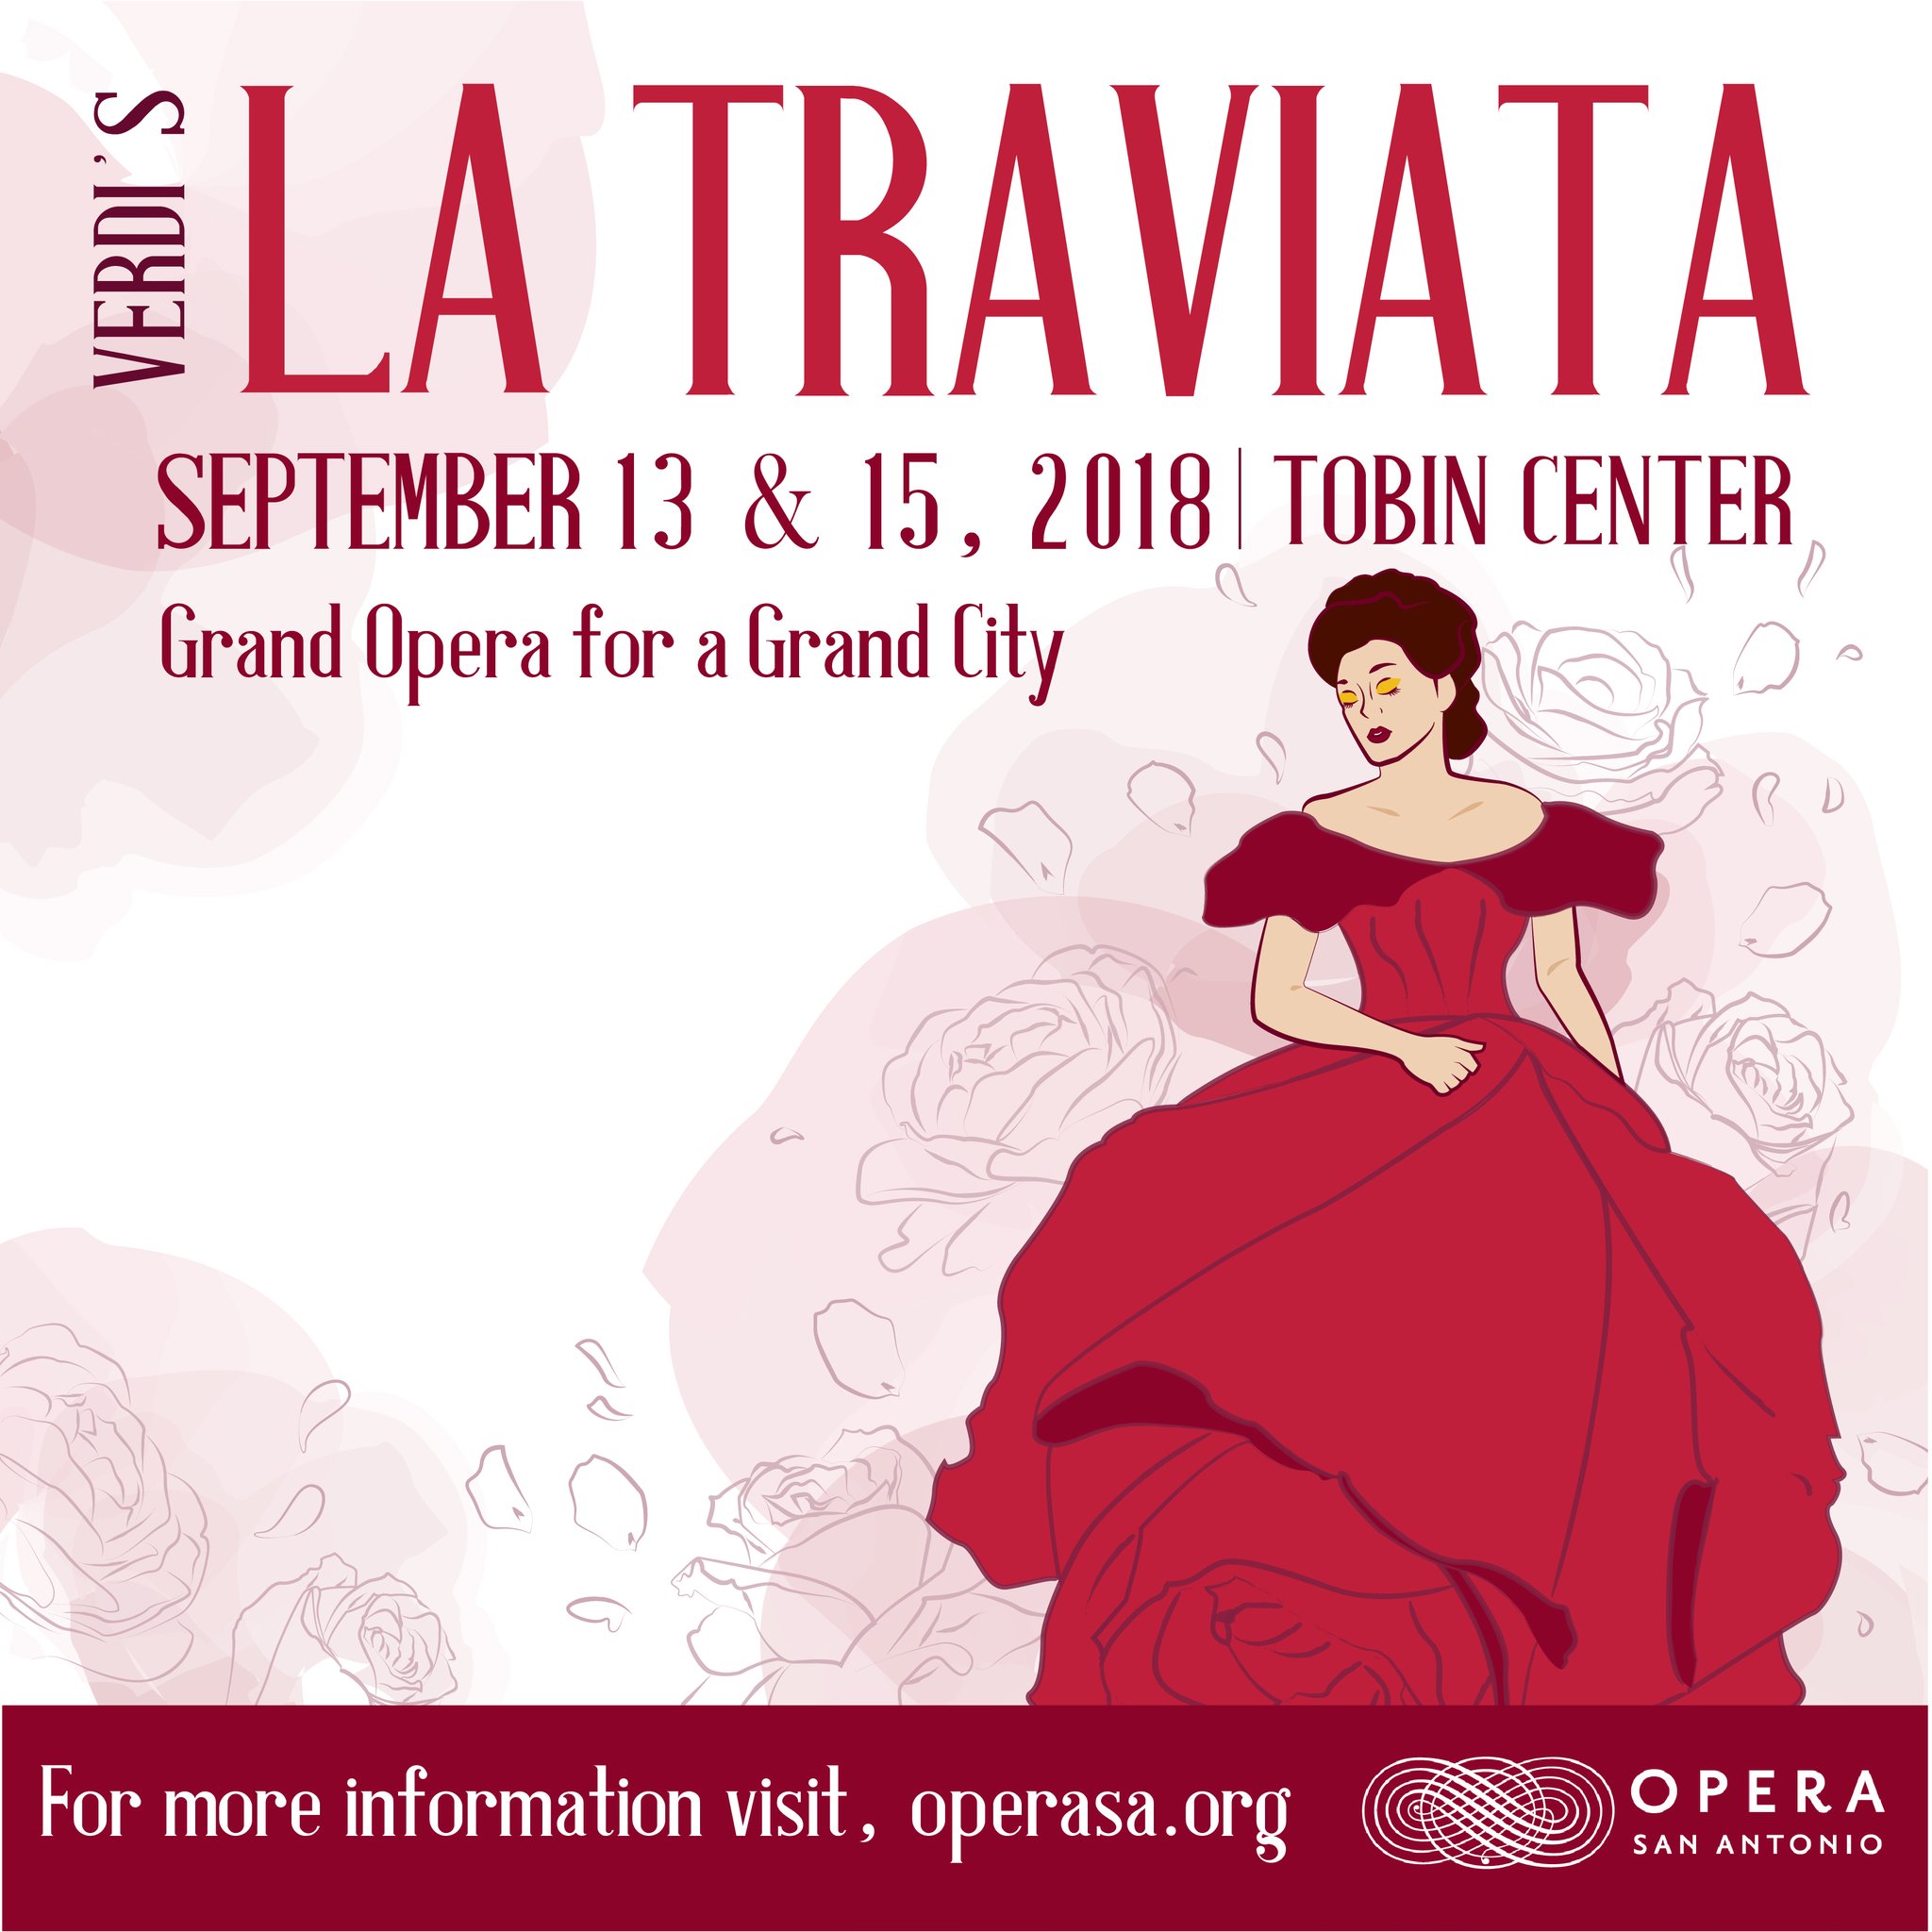 La Traviata by Opera San Antonio